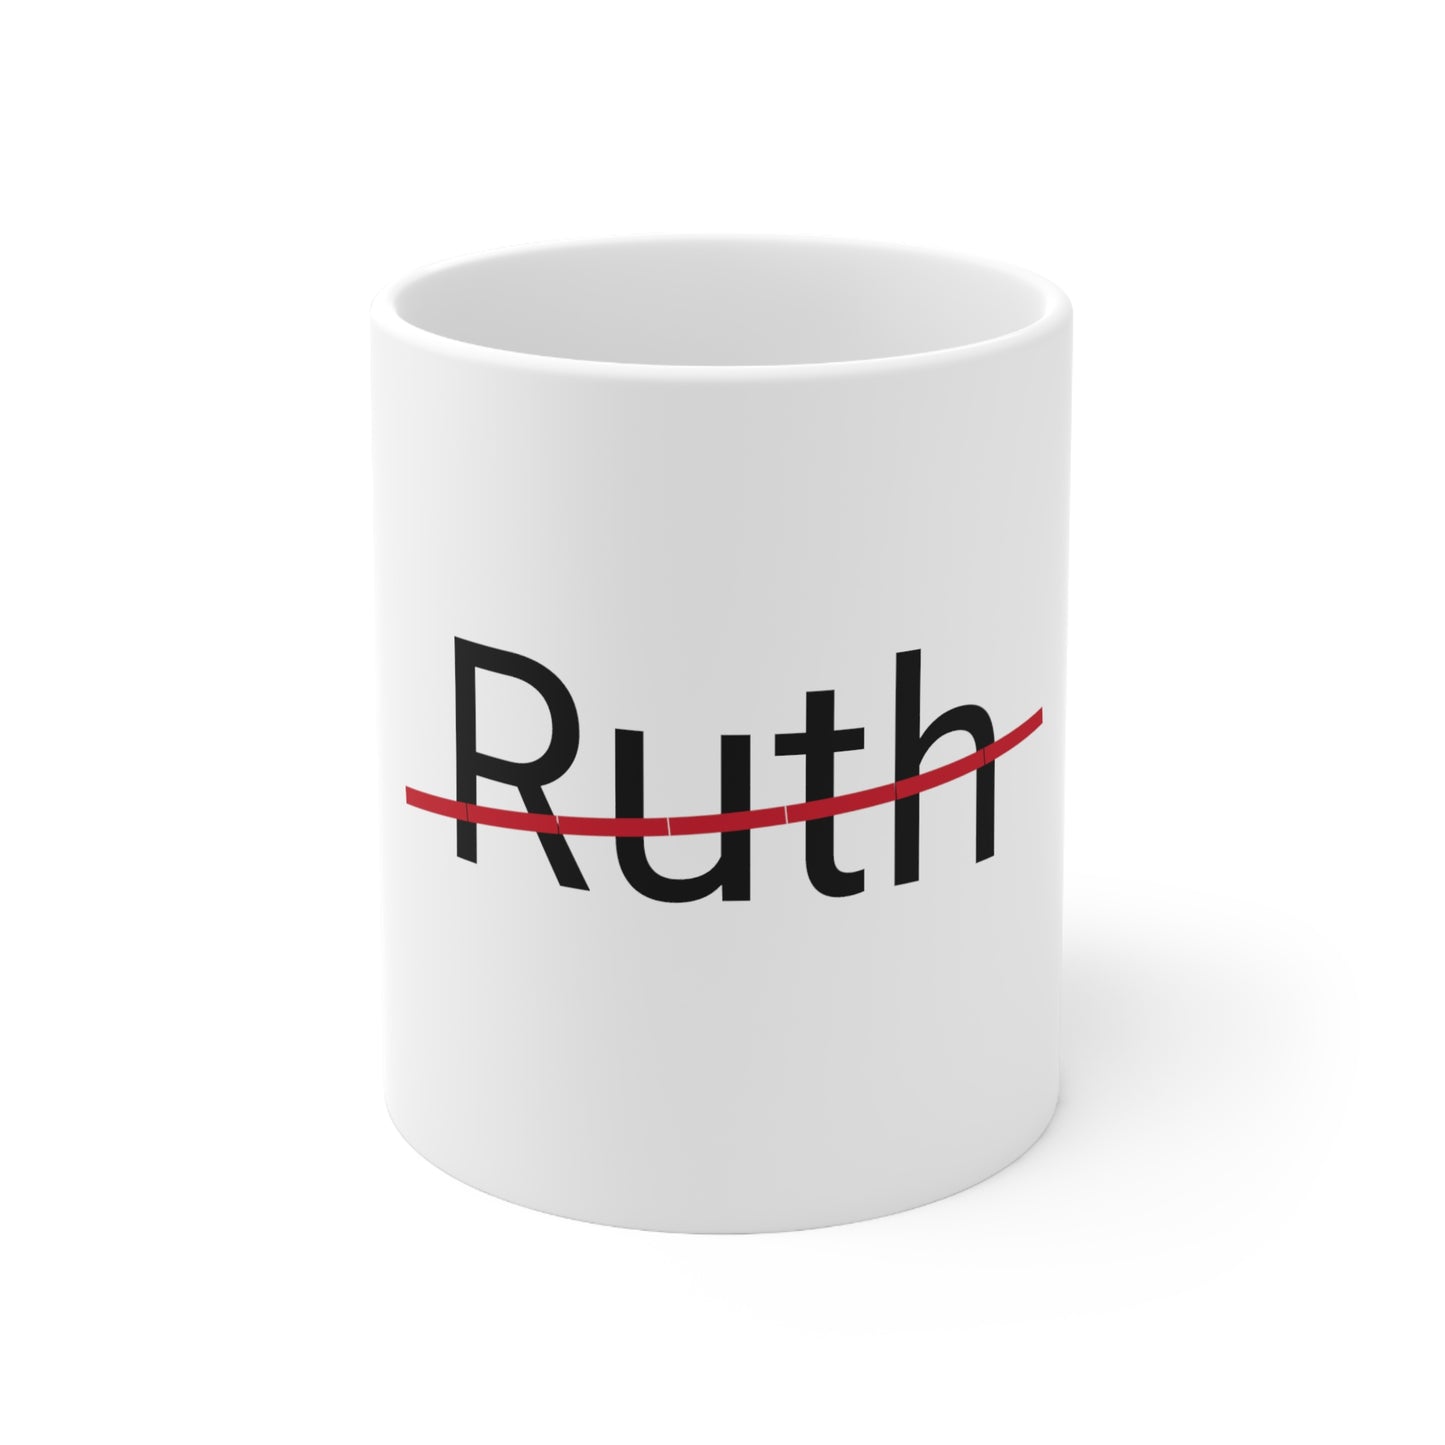 Ruth - not my name Ceramic coffee mug 11oz